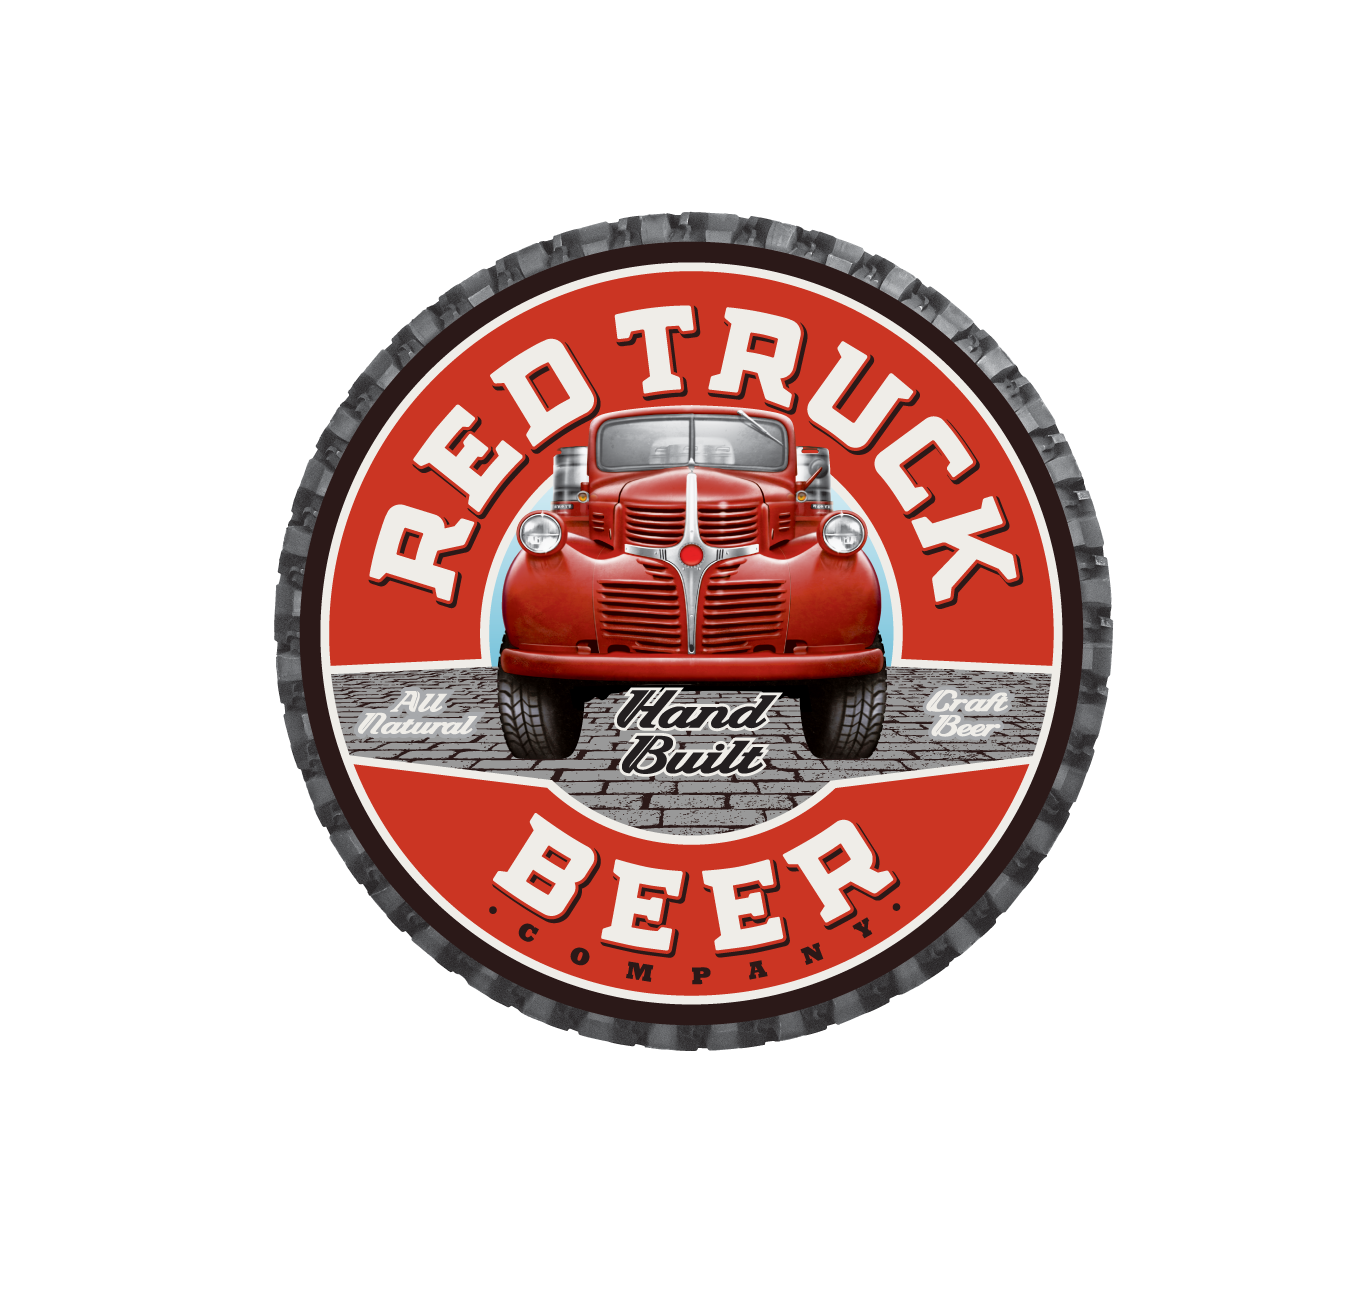 Red Truck Beer logo